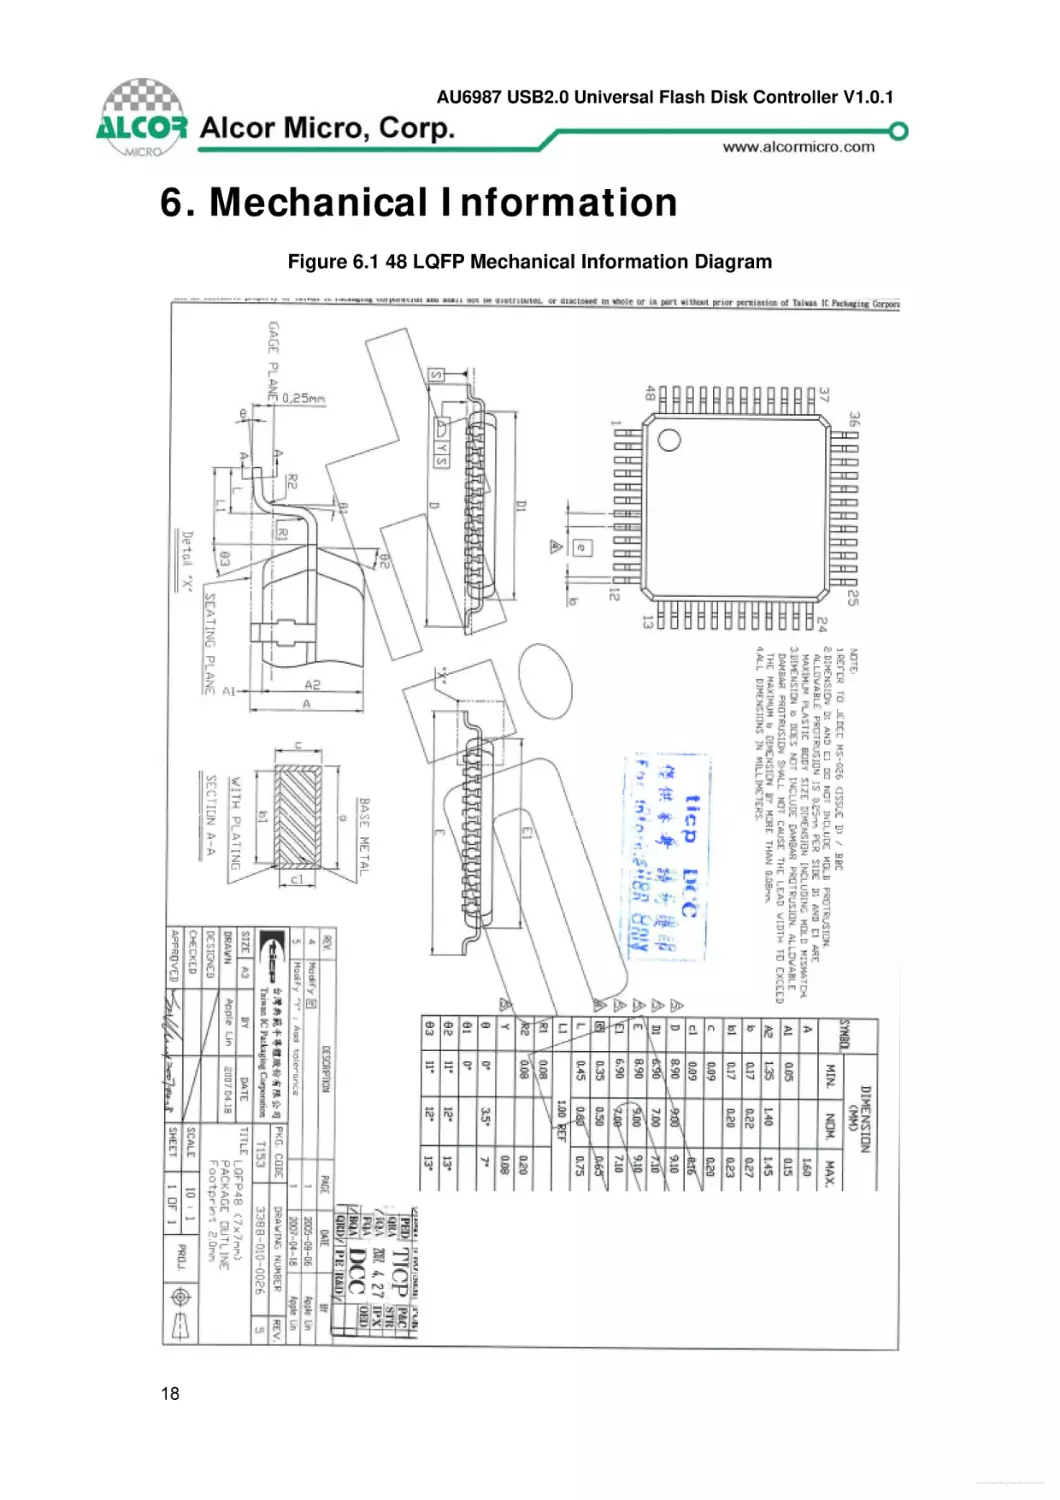 6. Mechanical Information
Figure 6.1 48 LQFP Mechanical Information Diagram